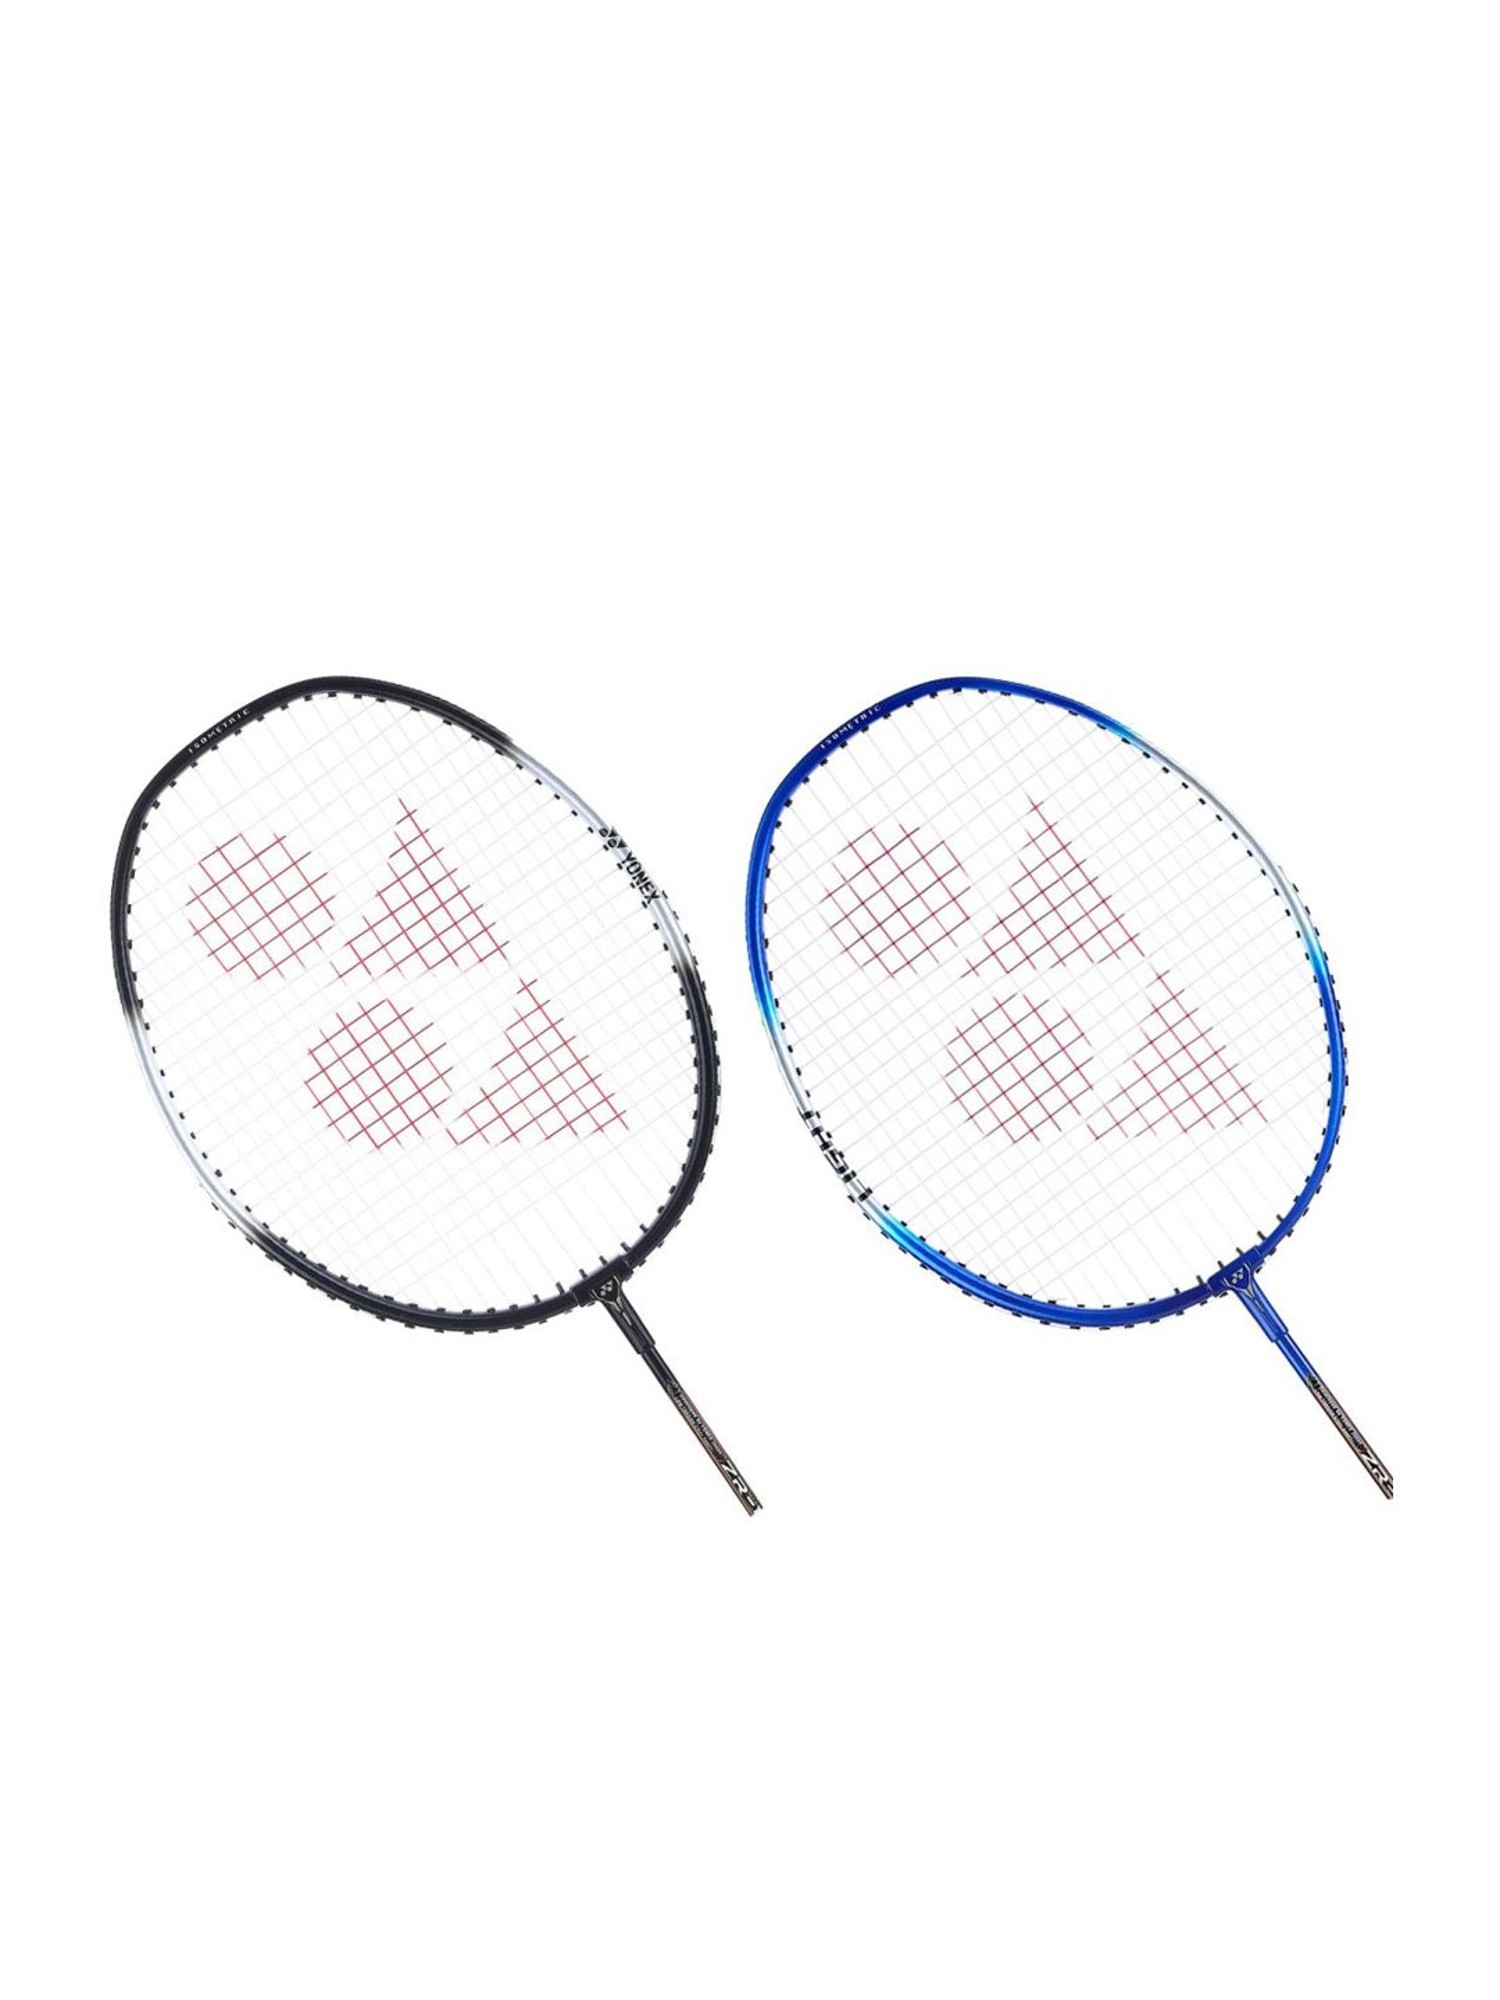 Yonex ZR 100 Light Black Aluminium Badminton Racquet with Full Cover (Set of 2)